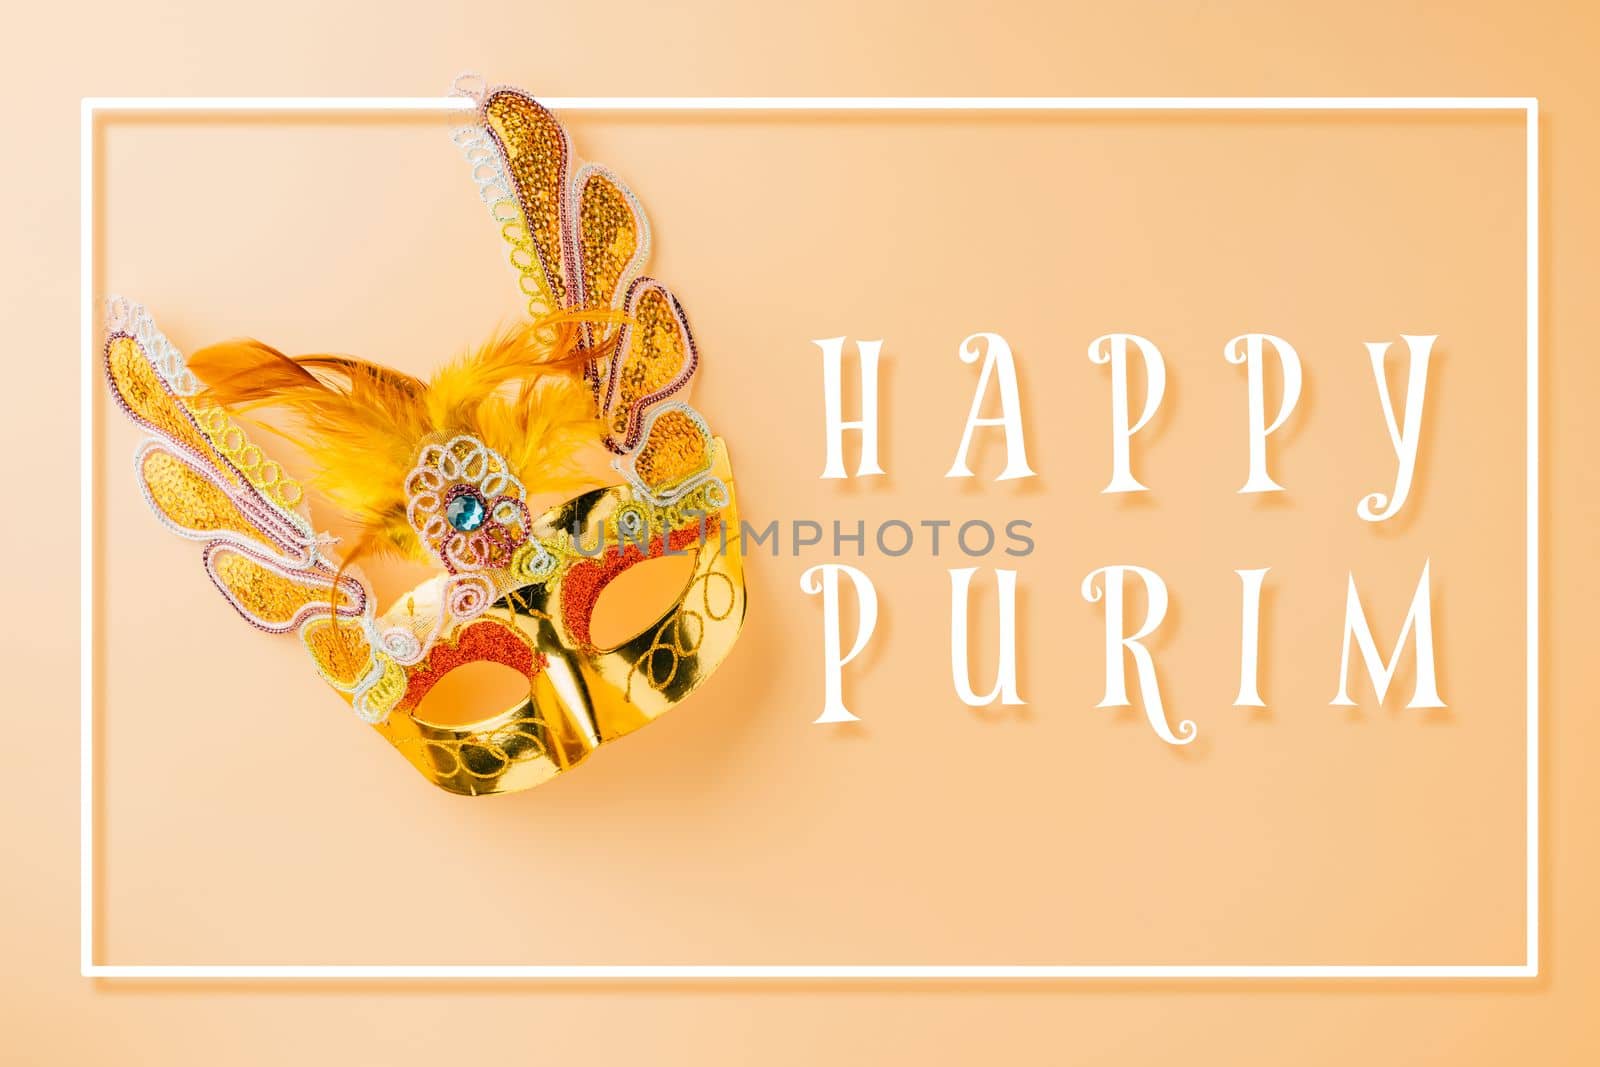 Happy Purim carnival decoration by Sorapop